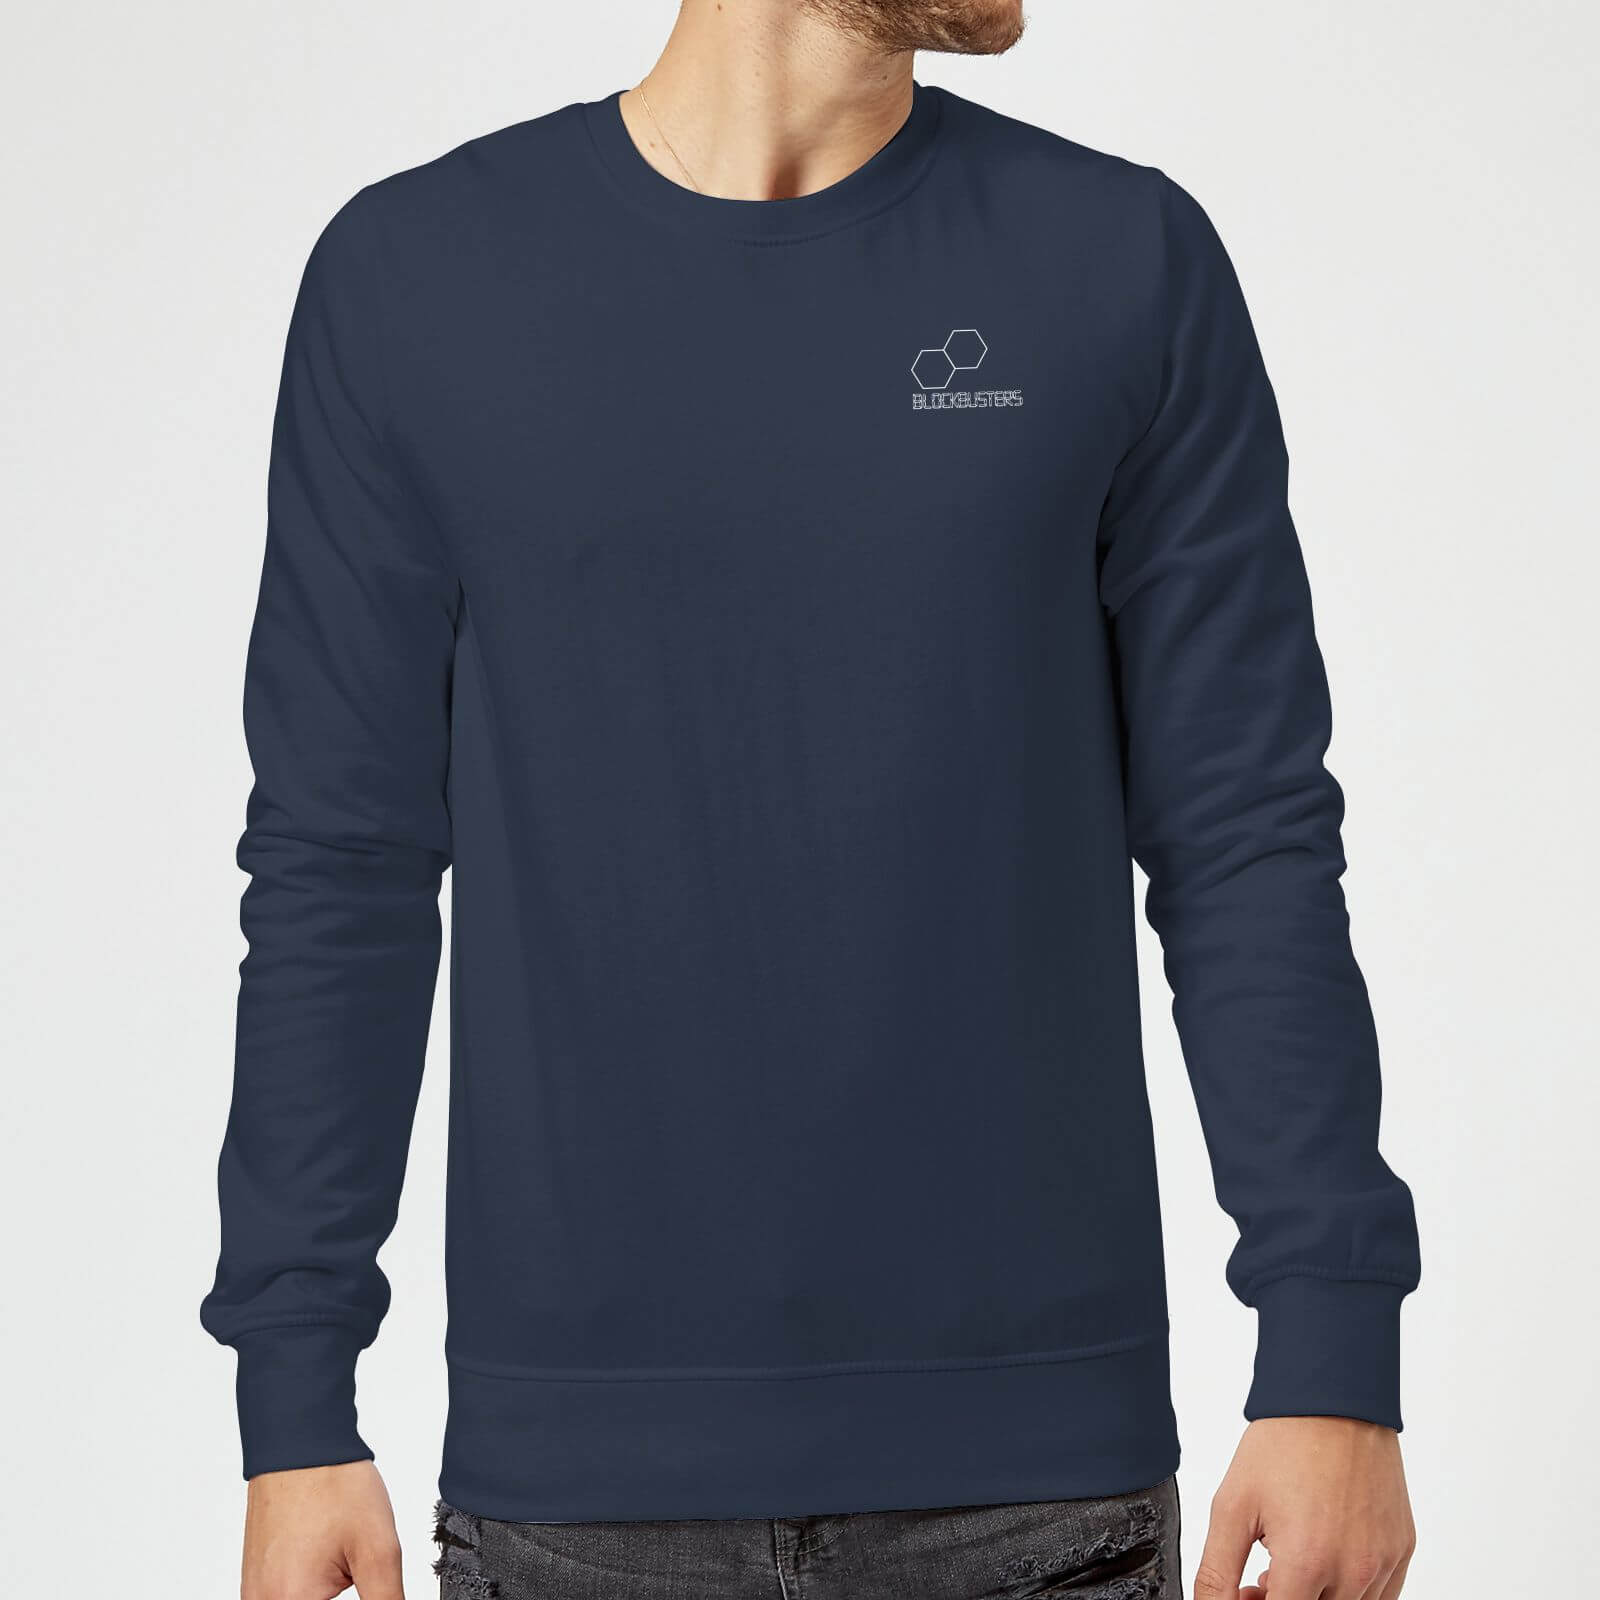 Blockbusters Pocket Print Sweatshirt - Navy - S - Navy